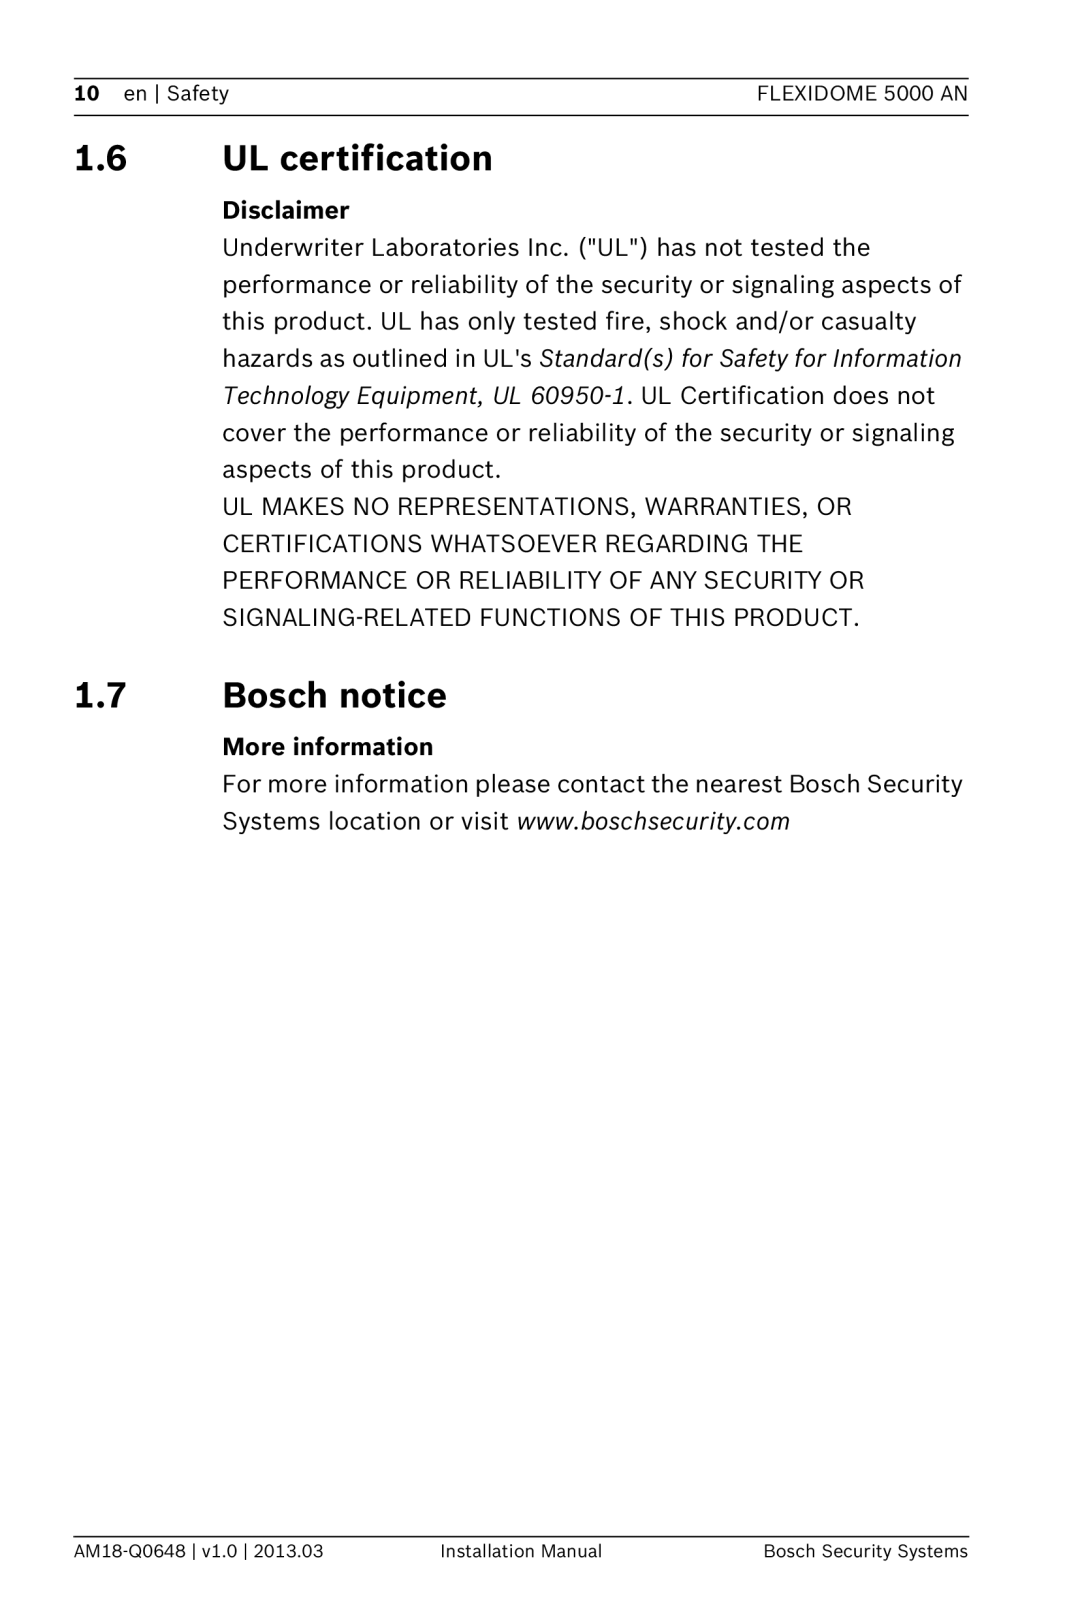 Bosch Appliances 5000, AN installation manual 1.6UL certification, 1.7Bosch notice, Disclaimer, More information 